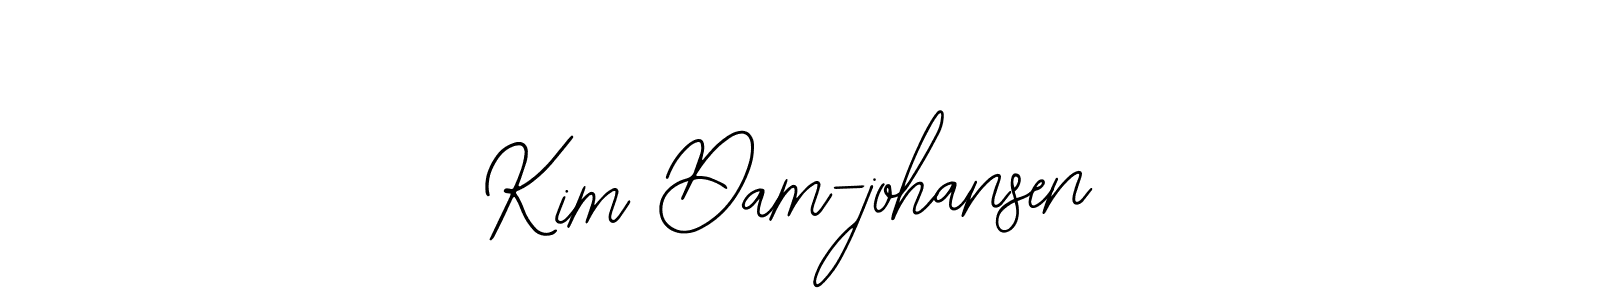 Make a beautiful signature design for name Kim Dam-johansen. Use this online signature maker to create a handwritten signature for free. Kim Dam-johansen signature style 12 images and pictures png